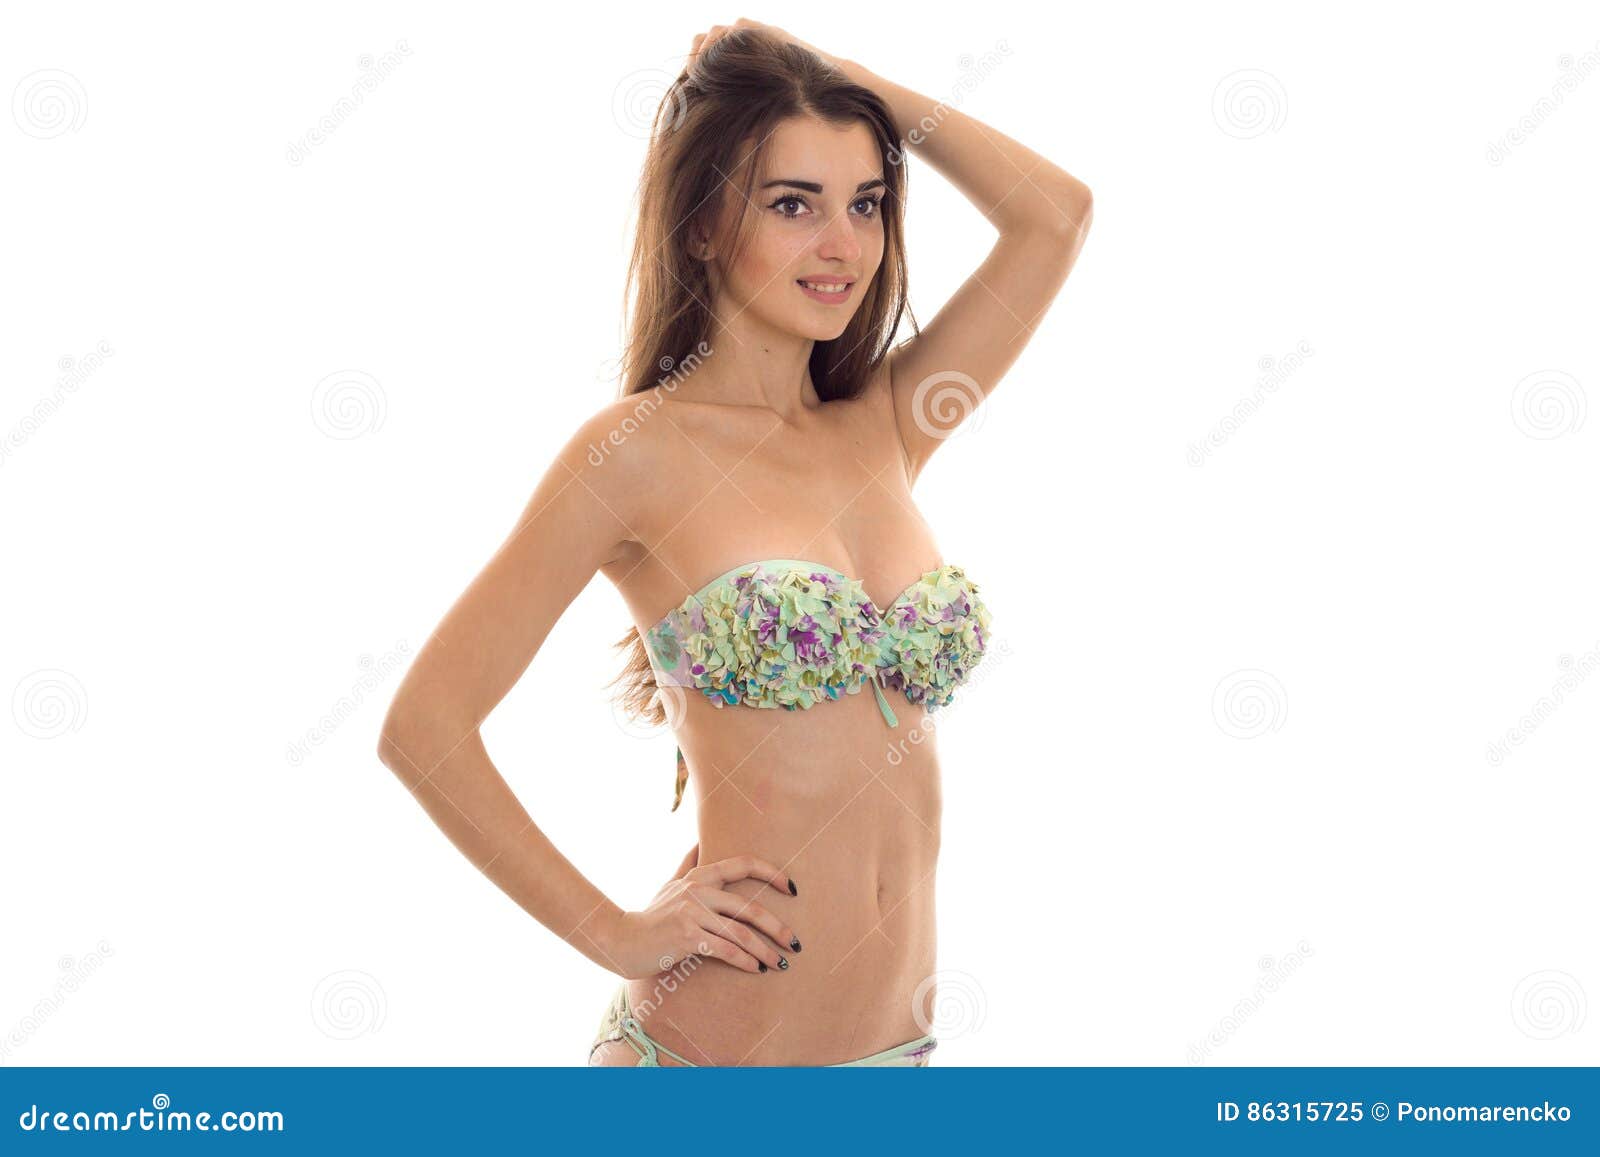 ash odedra share big boobs tiny bikini photos